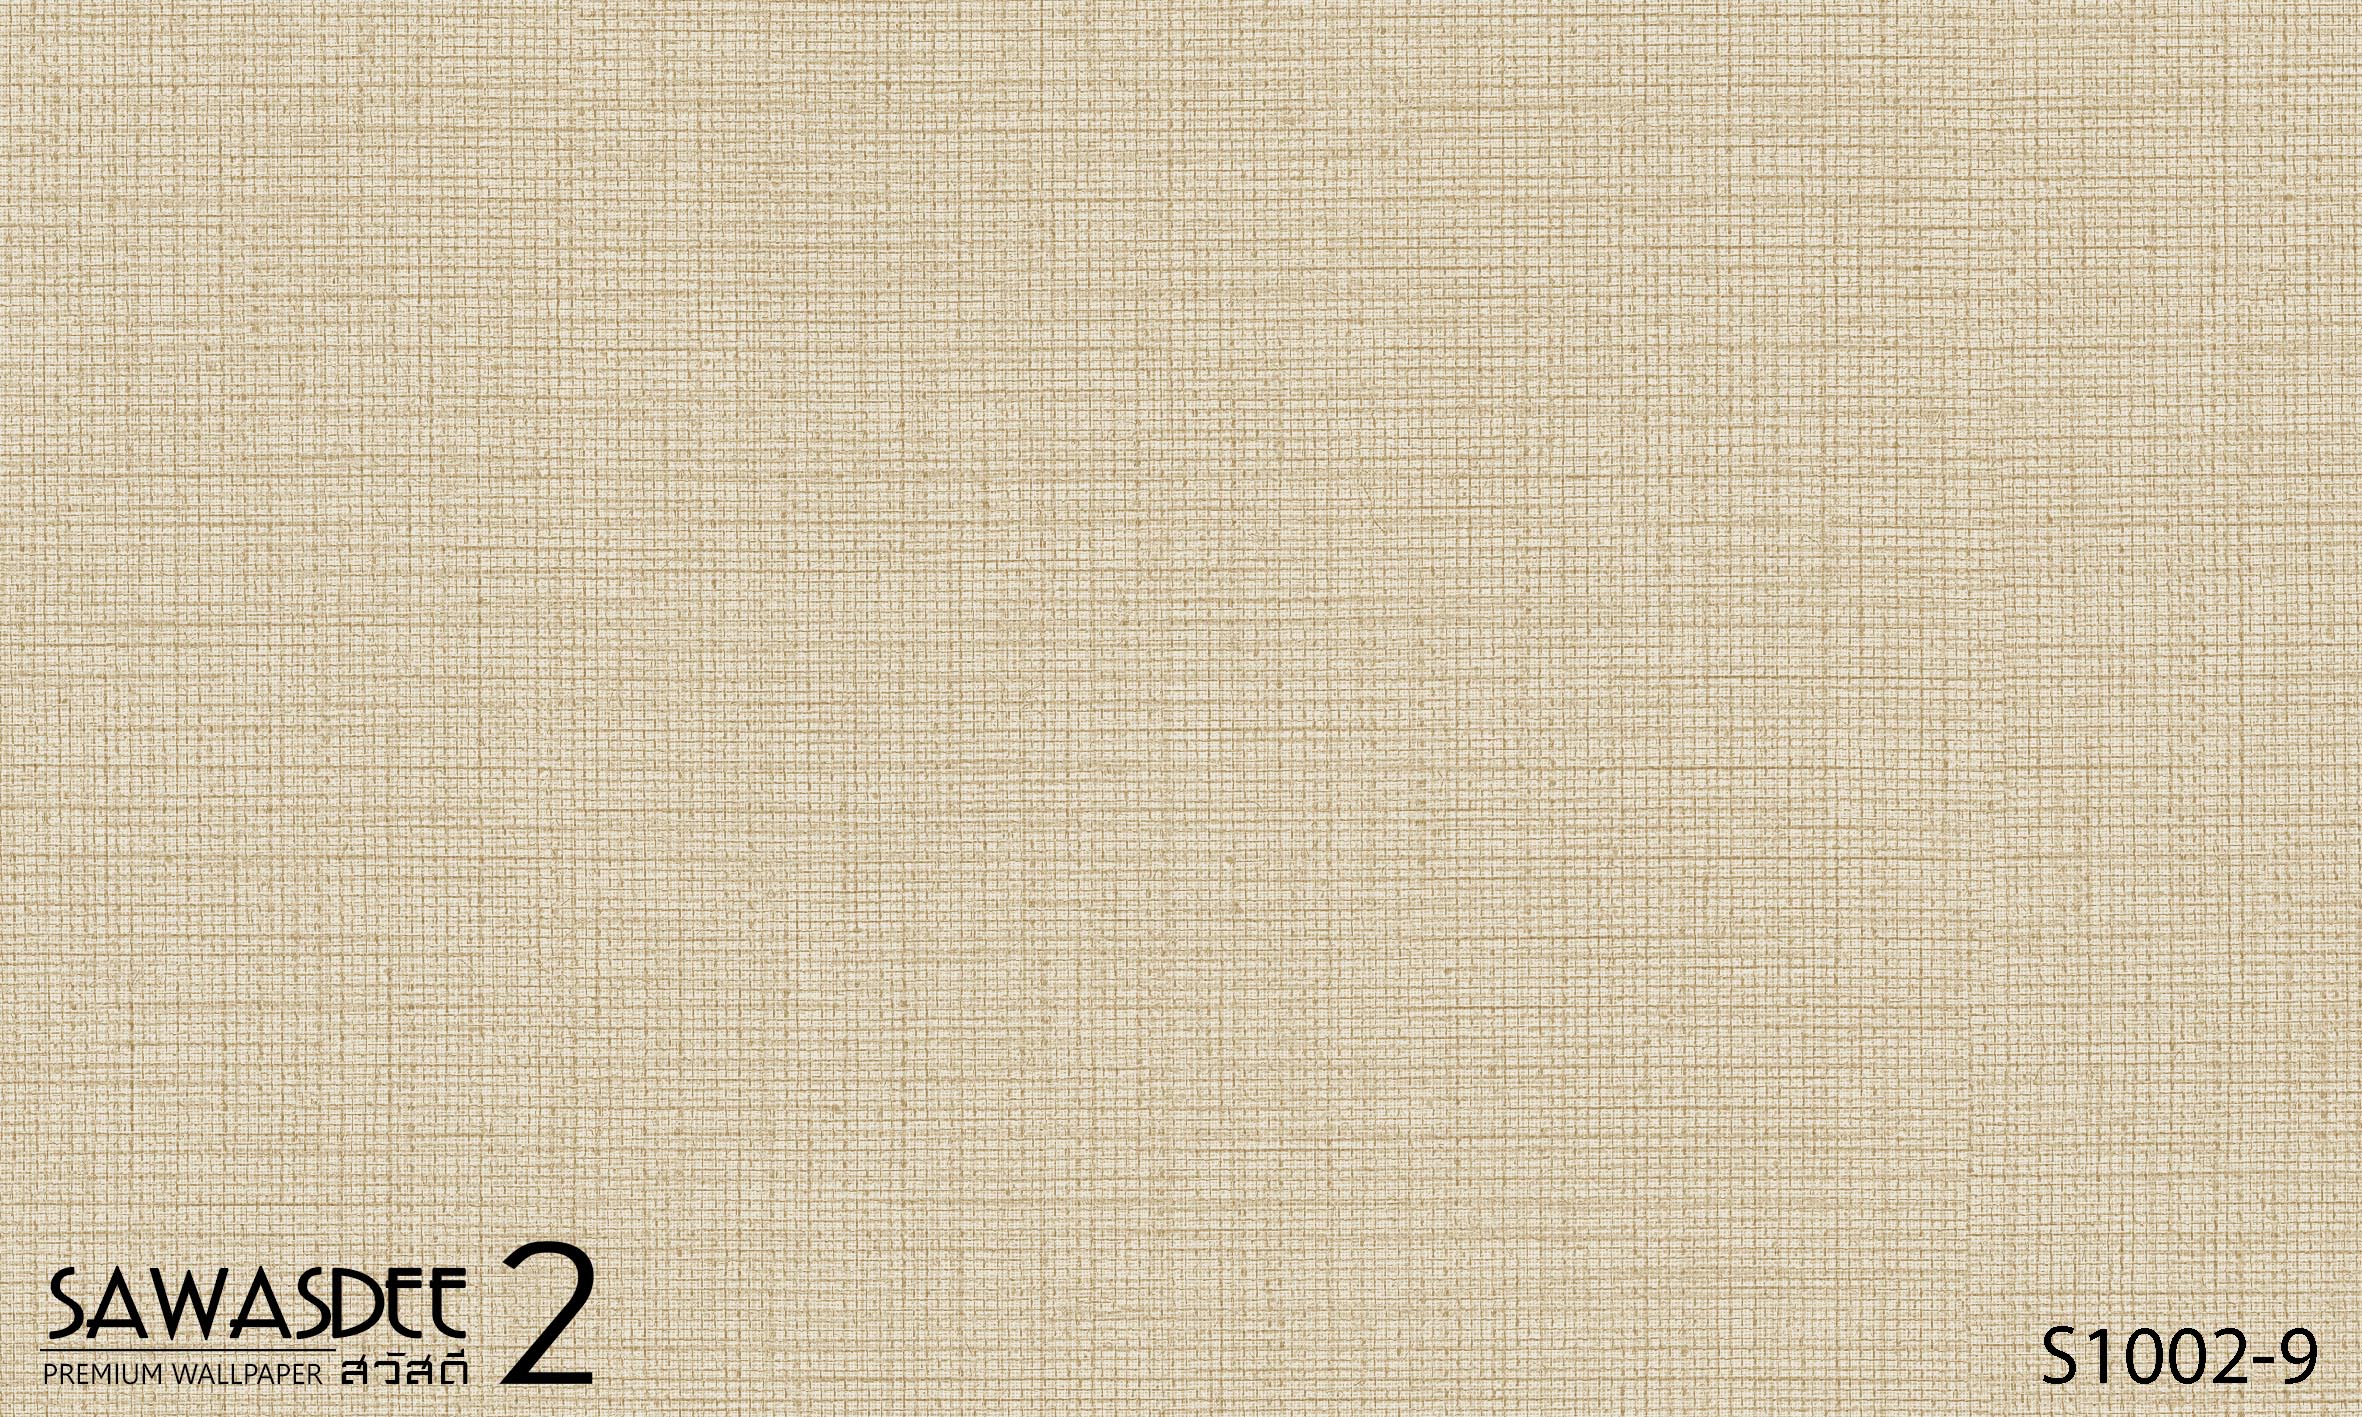 Wallpaper (SAWASDEE 2) S1002-9